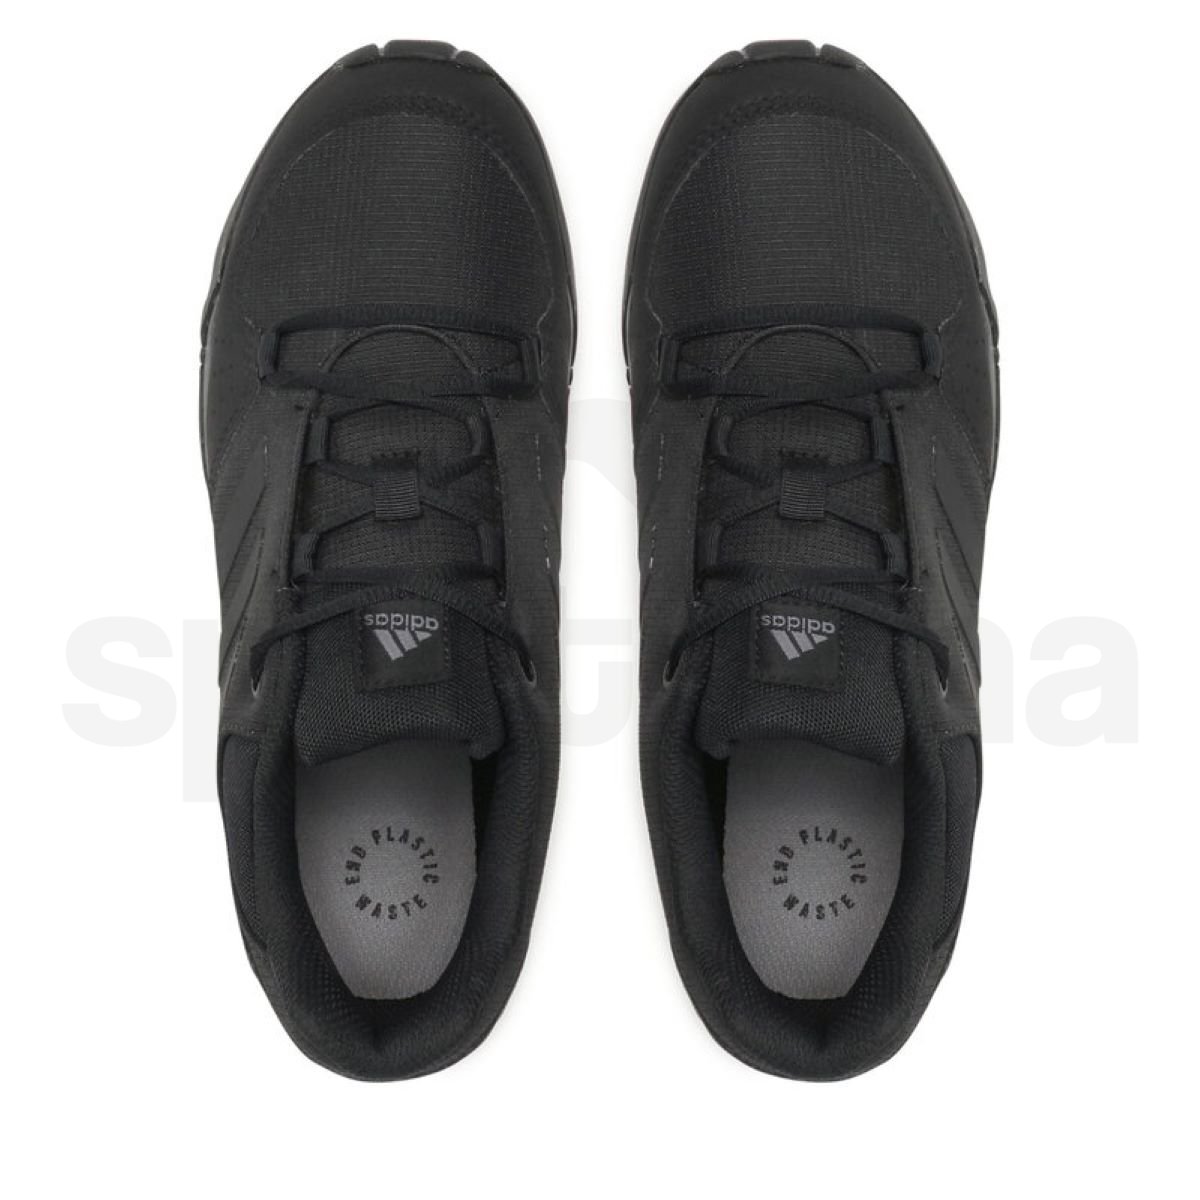 Obuv Adidas Hyperhiker Low K - černá